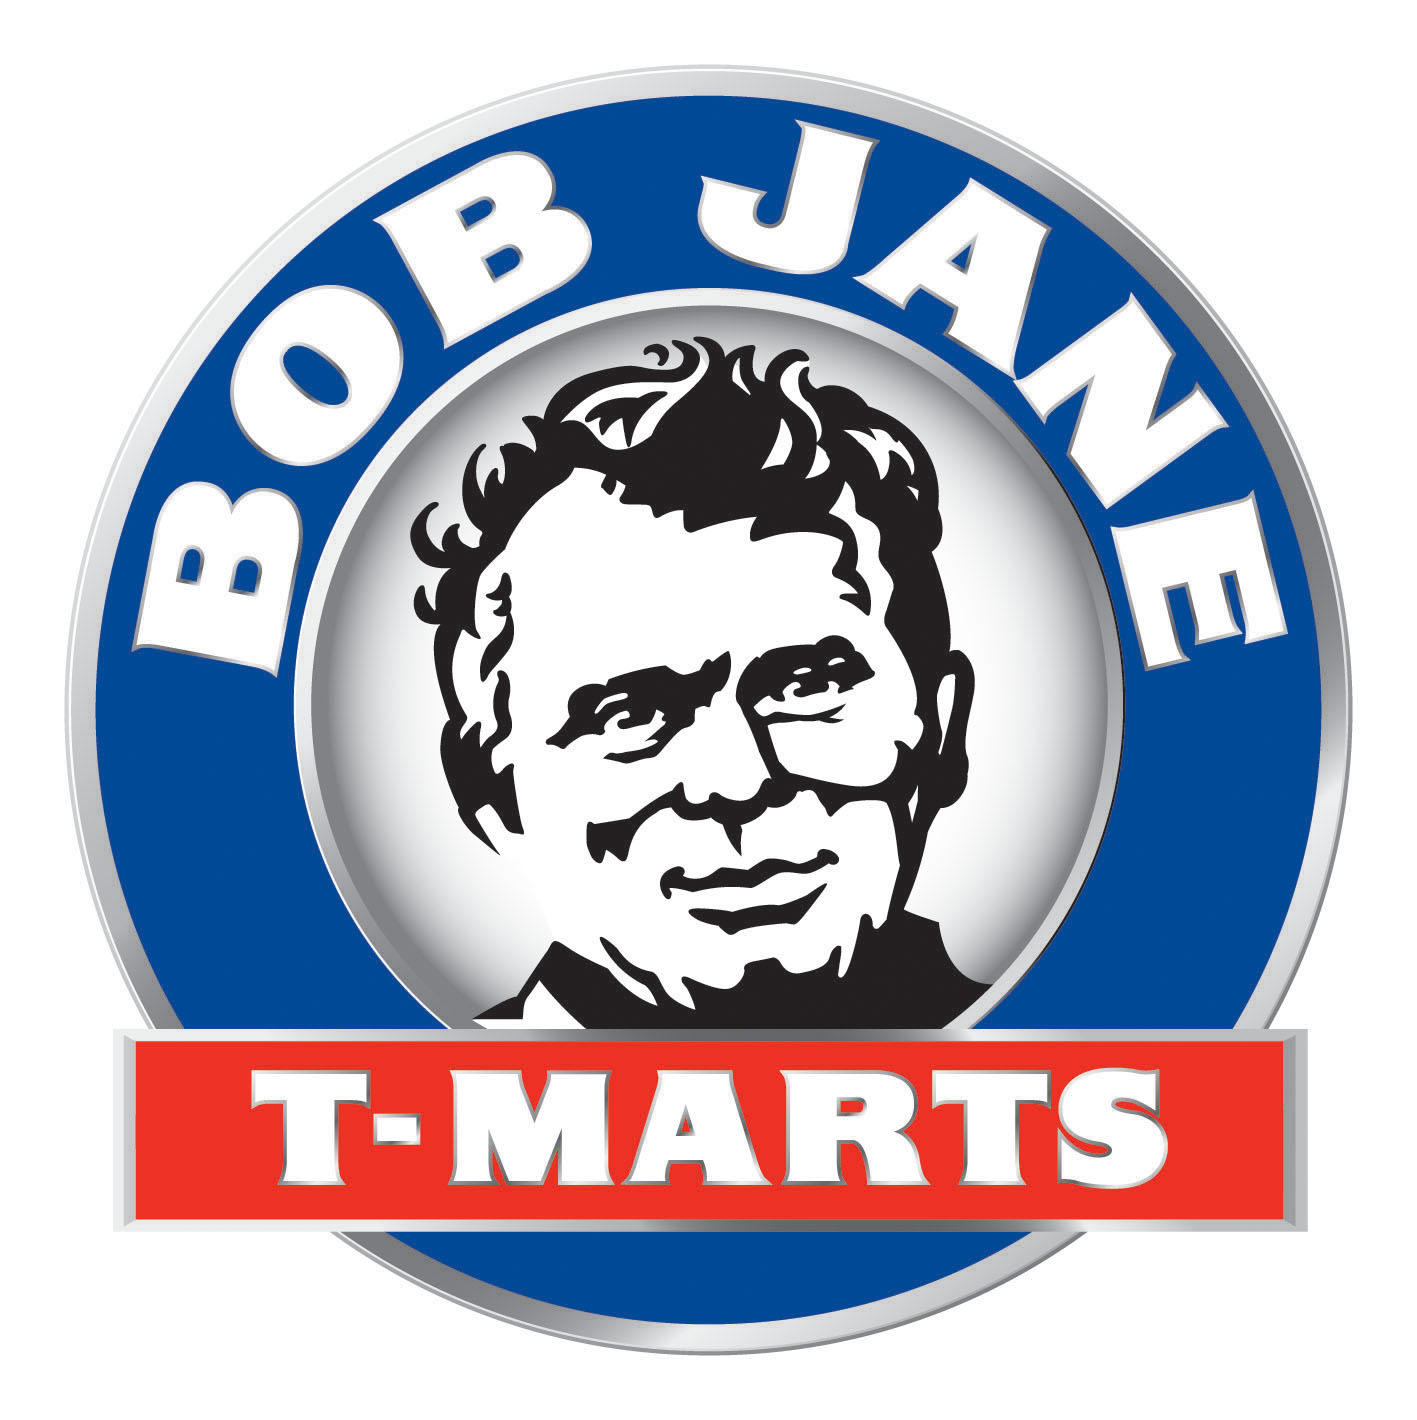 Images Bob Jane T-Marts Redcliffe